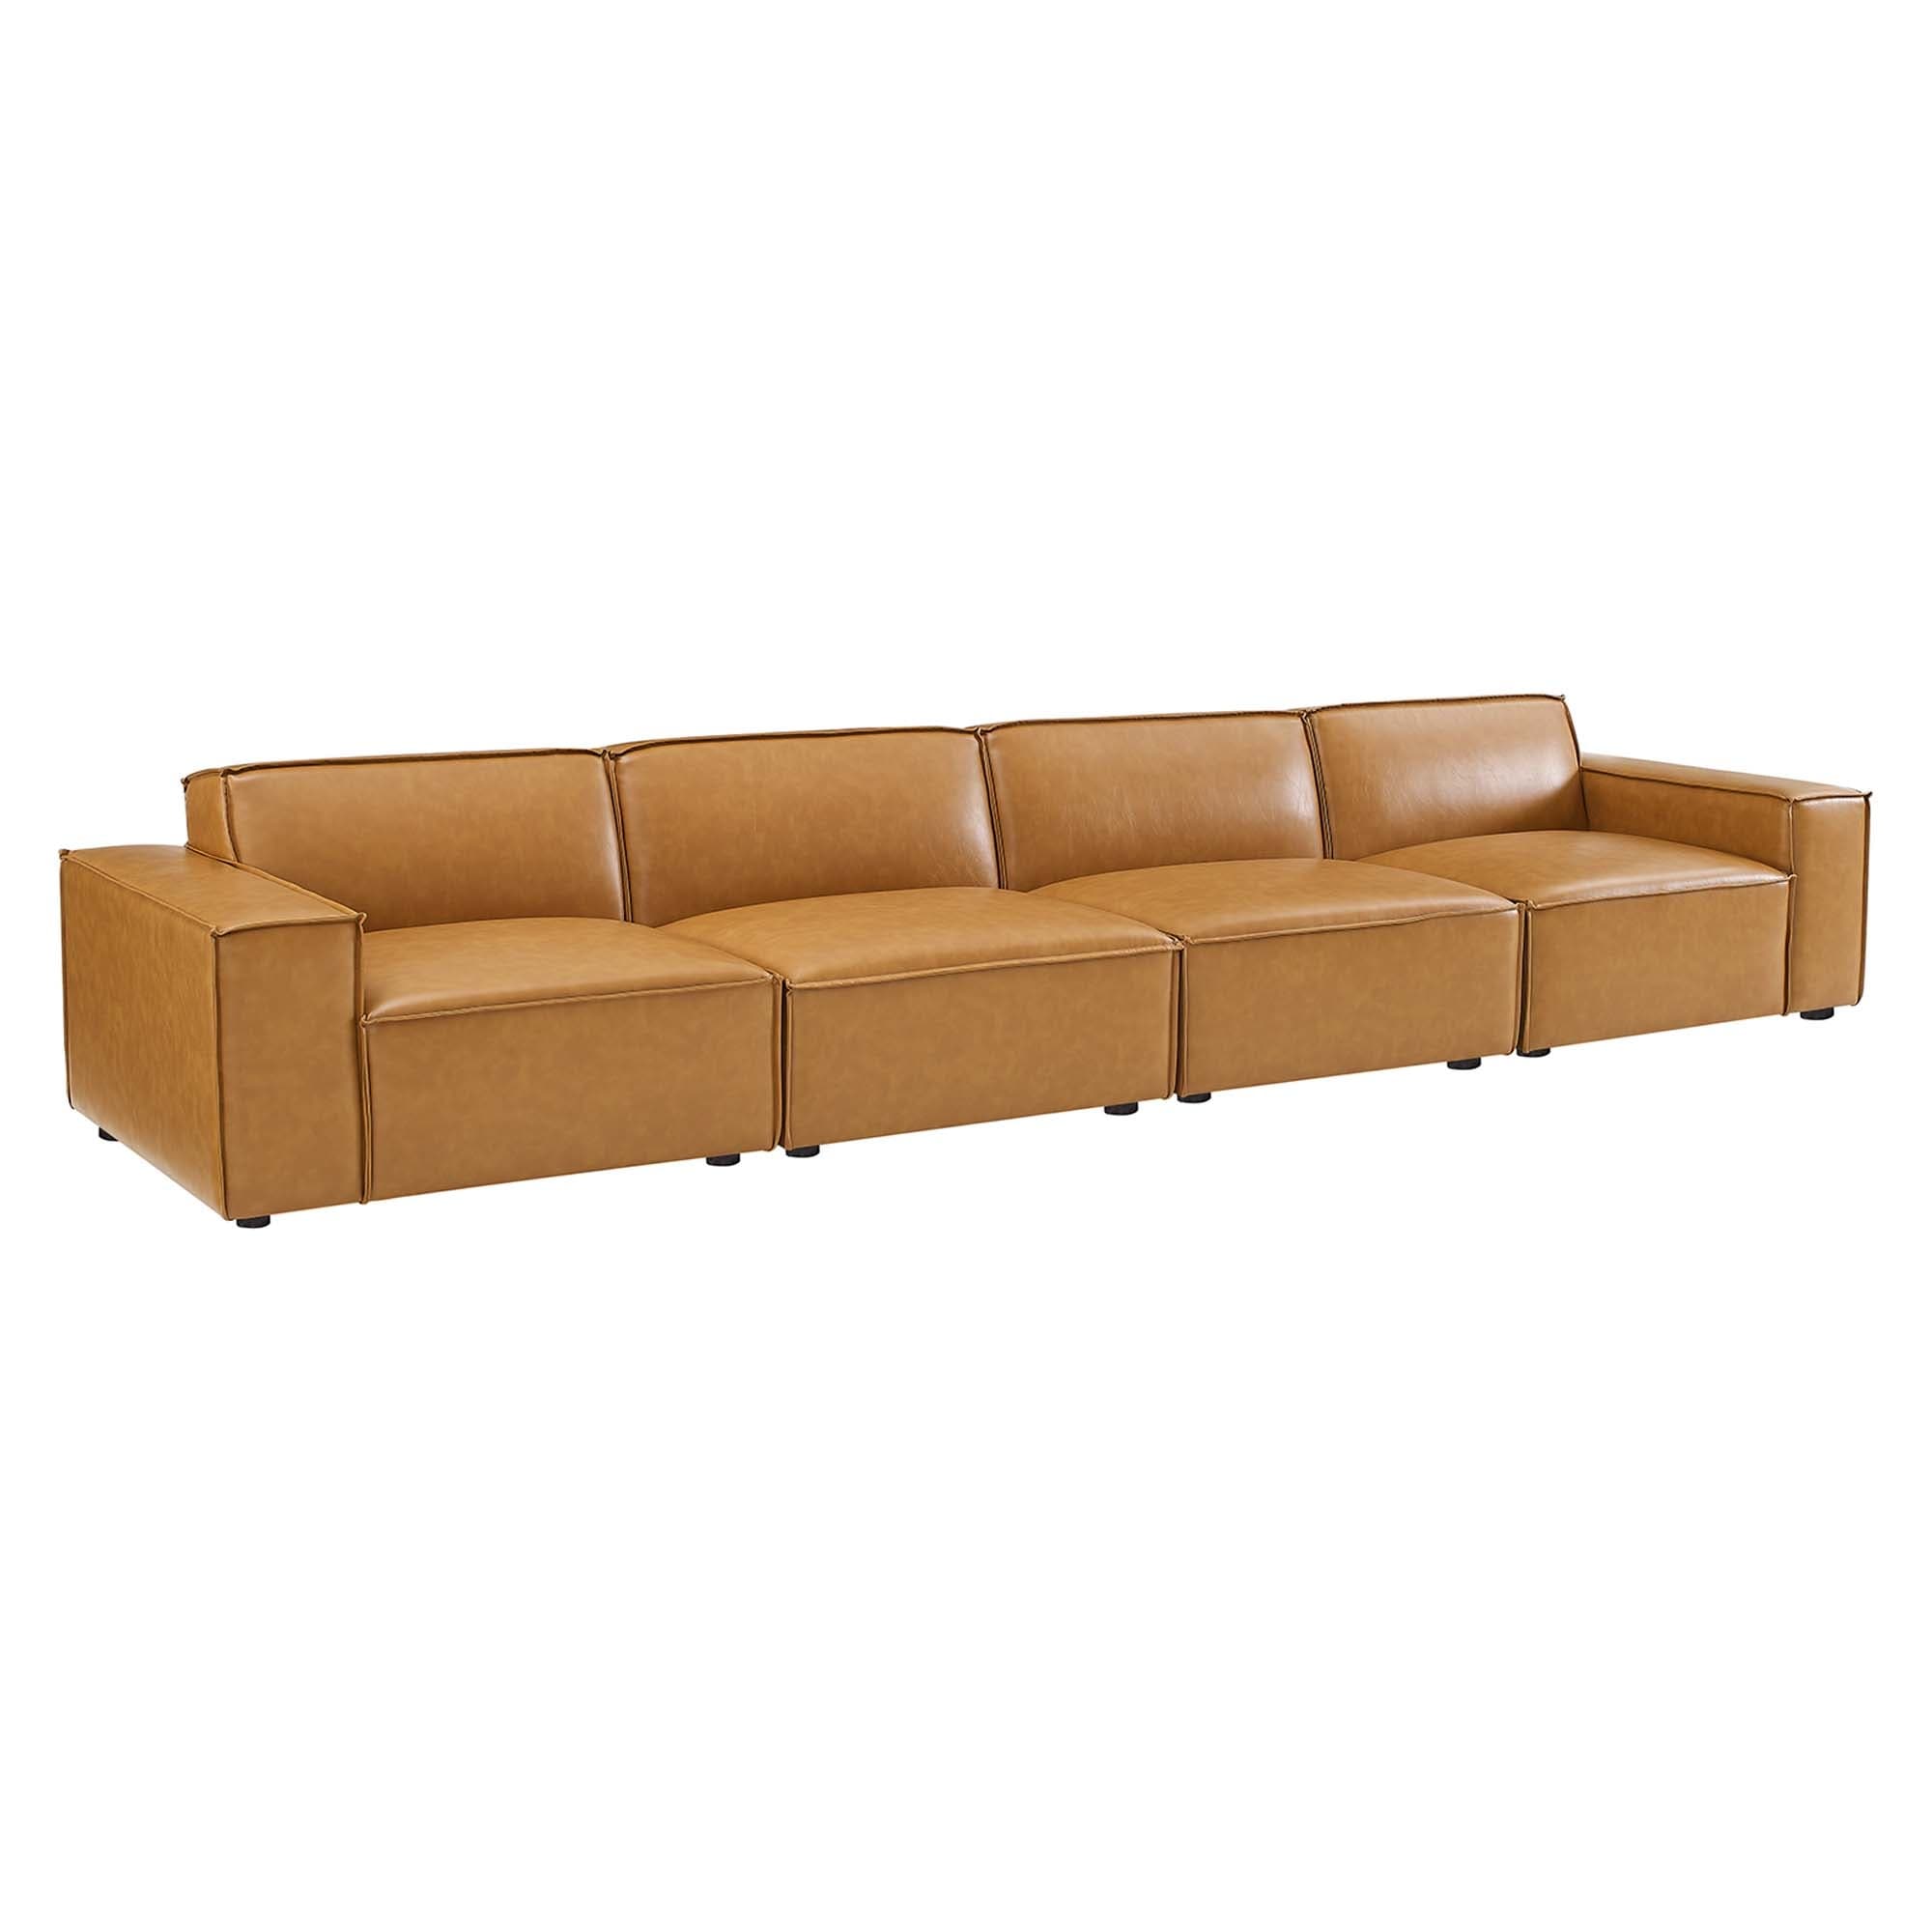 4-Piece On - Bed Sofa Bath Restore - Sale Vegan 32403104 & Beyond Leather -